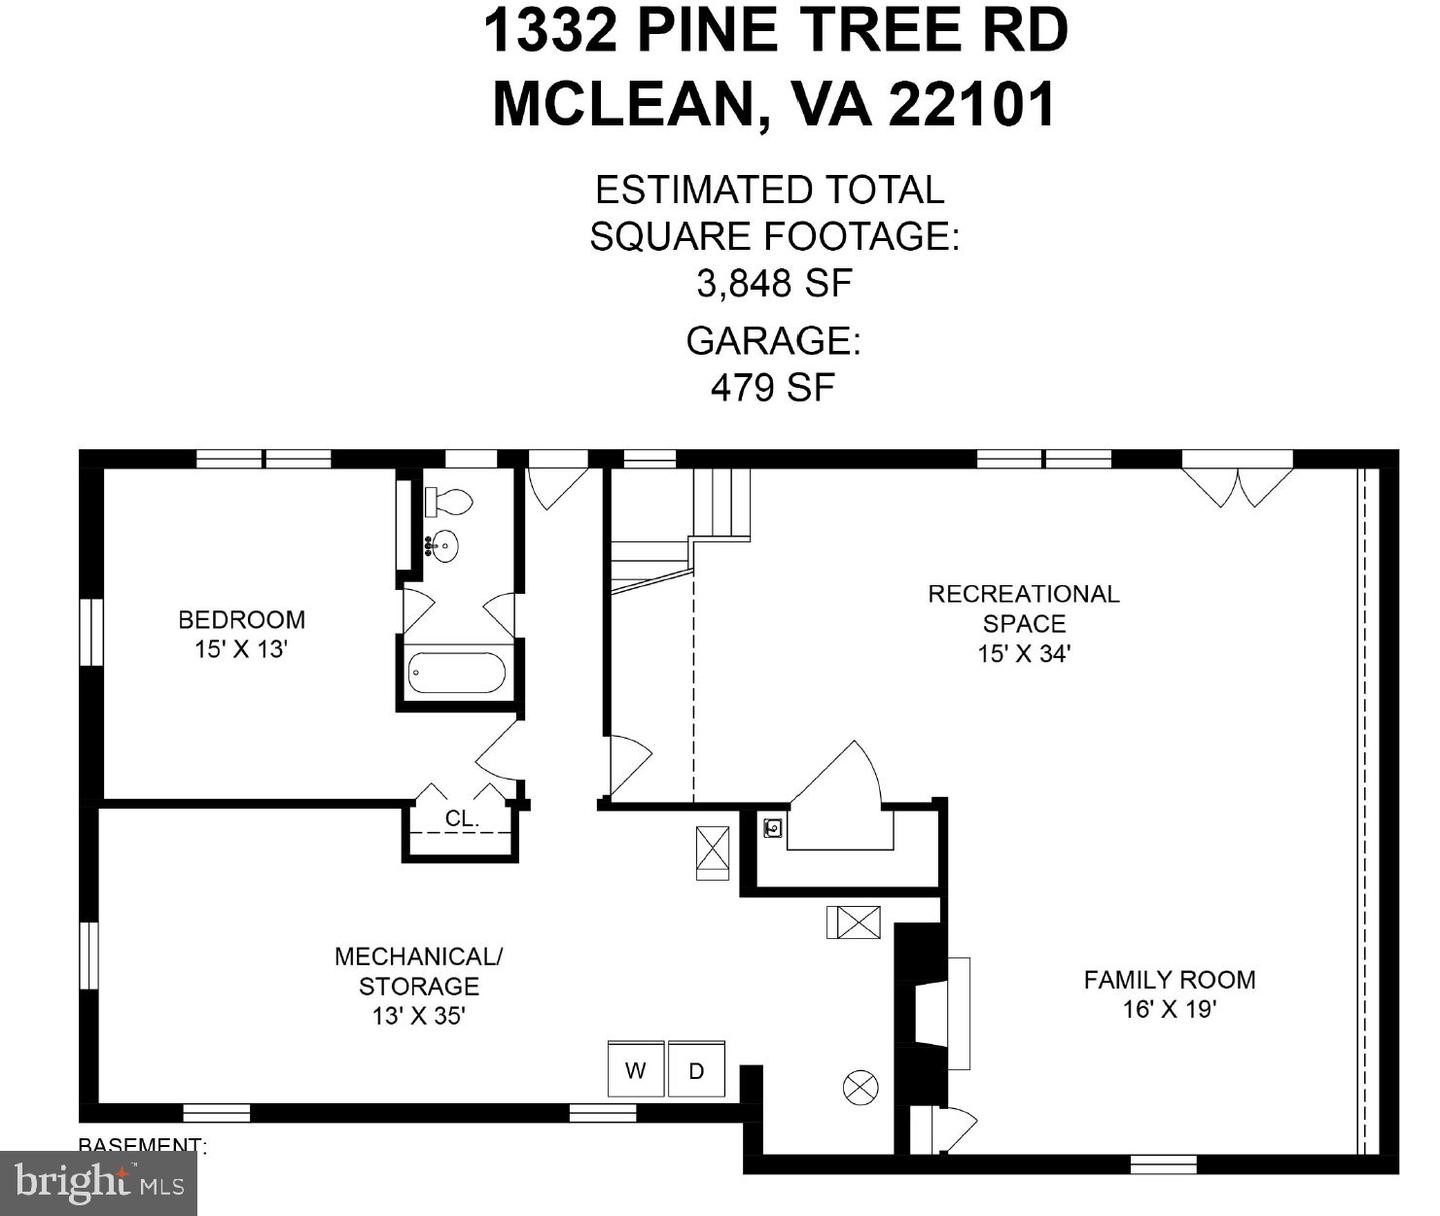 21. 1332 Pine Tree Rd